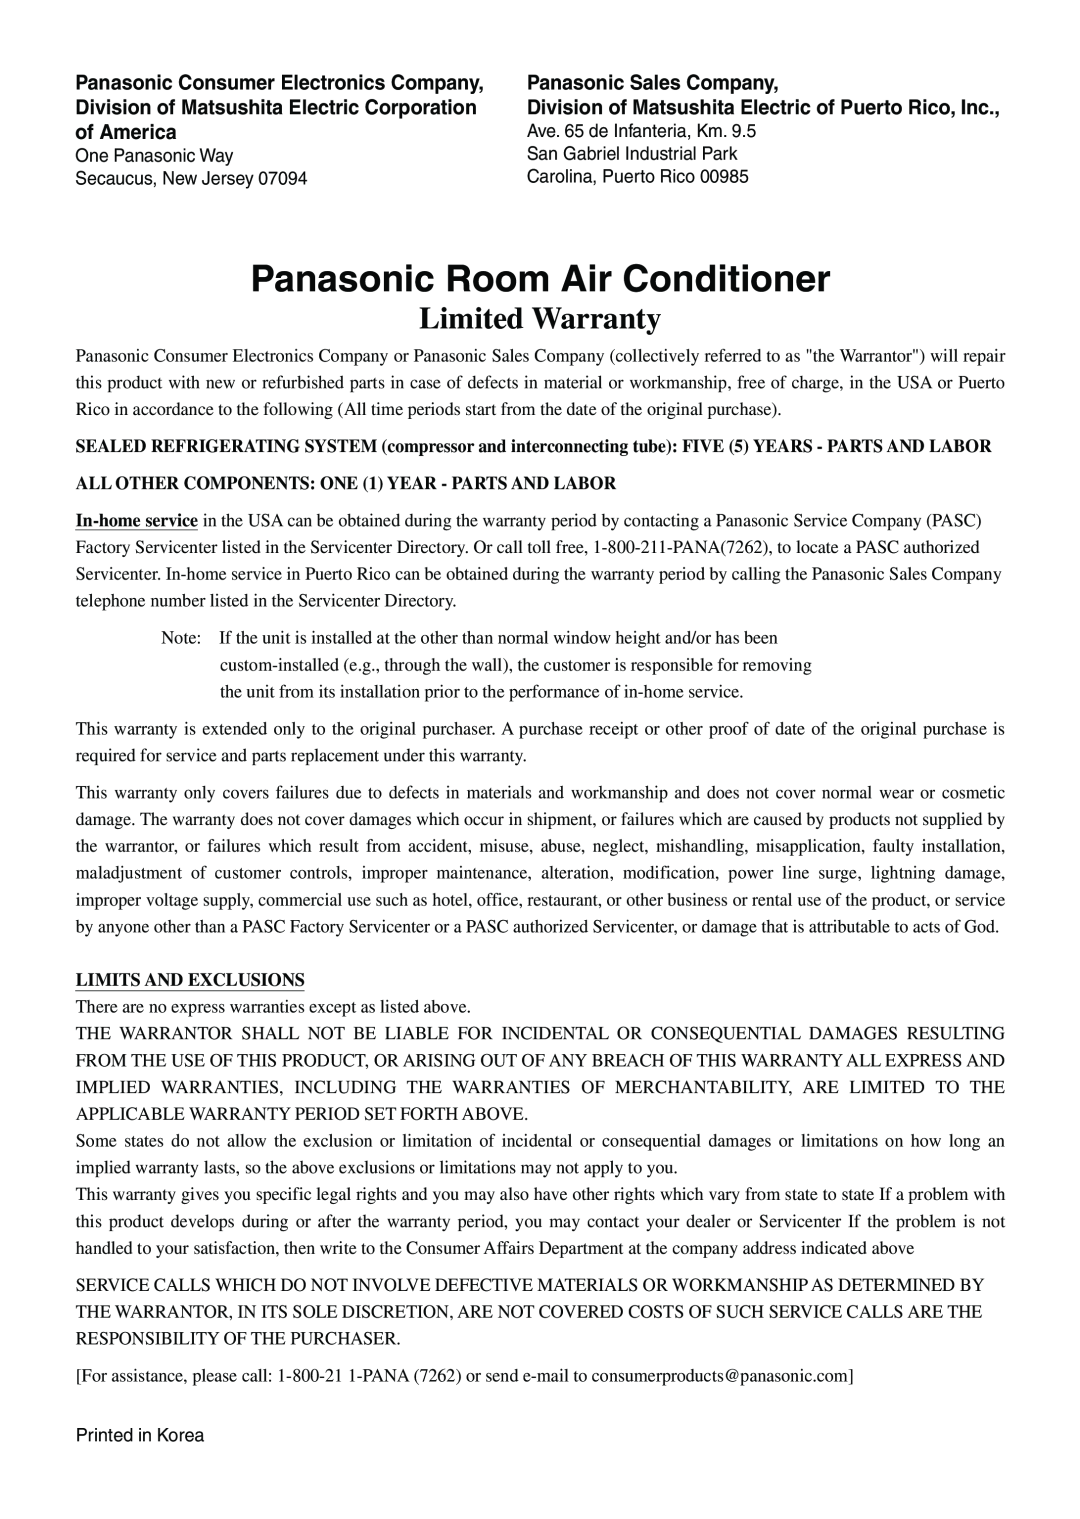 Quasar HQ-2244UH Panasonic Consumer Electronics Company, Panasonic Sales Company, of America, Limited Warranty 